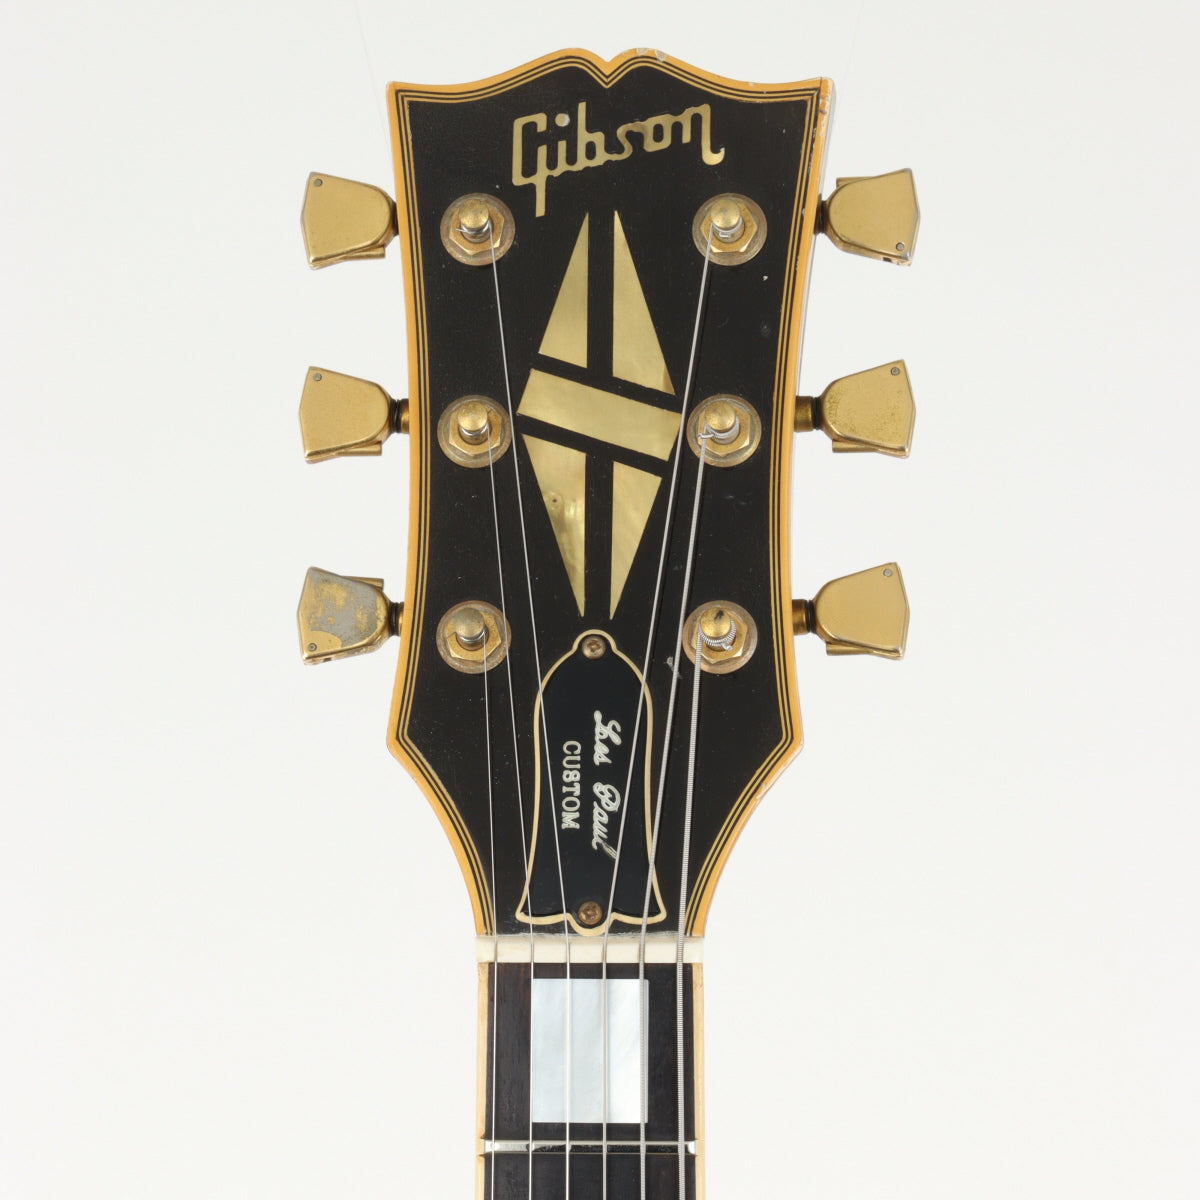 [SN 80791002] USED Gibson USA / 1981 Les Paul Custom Left Hand Ebony [11]